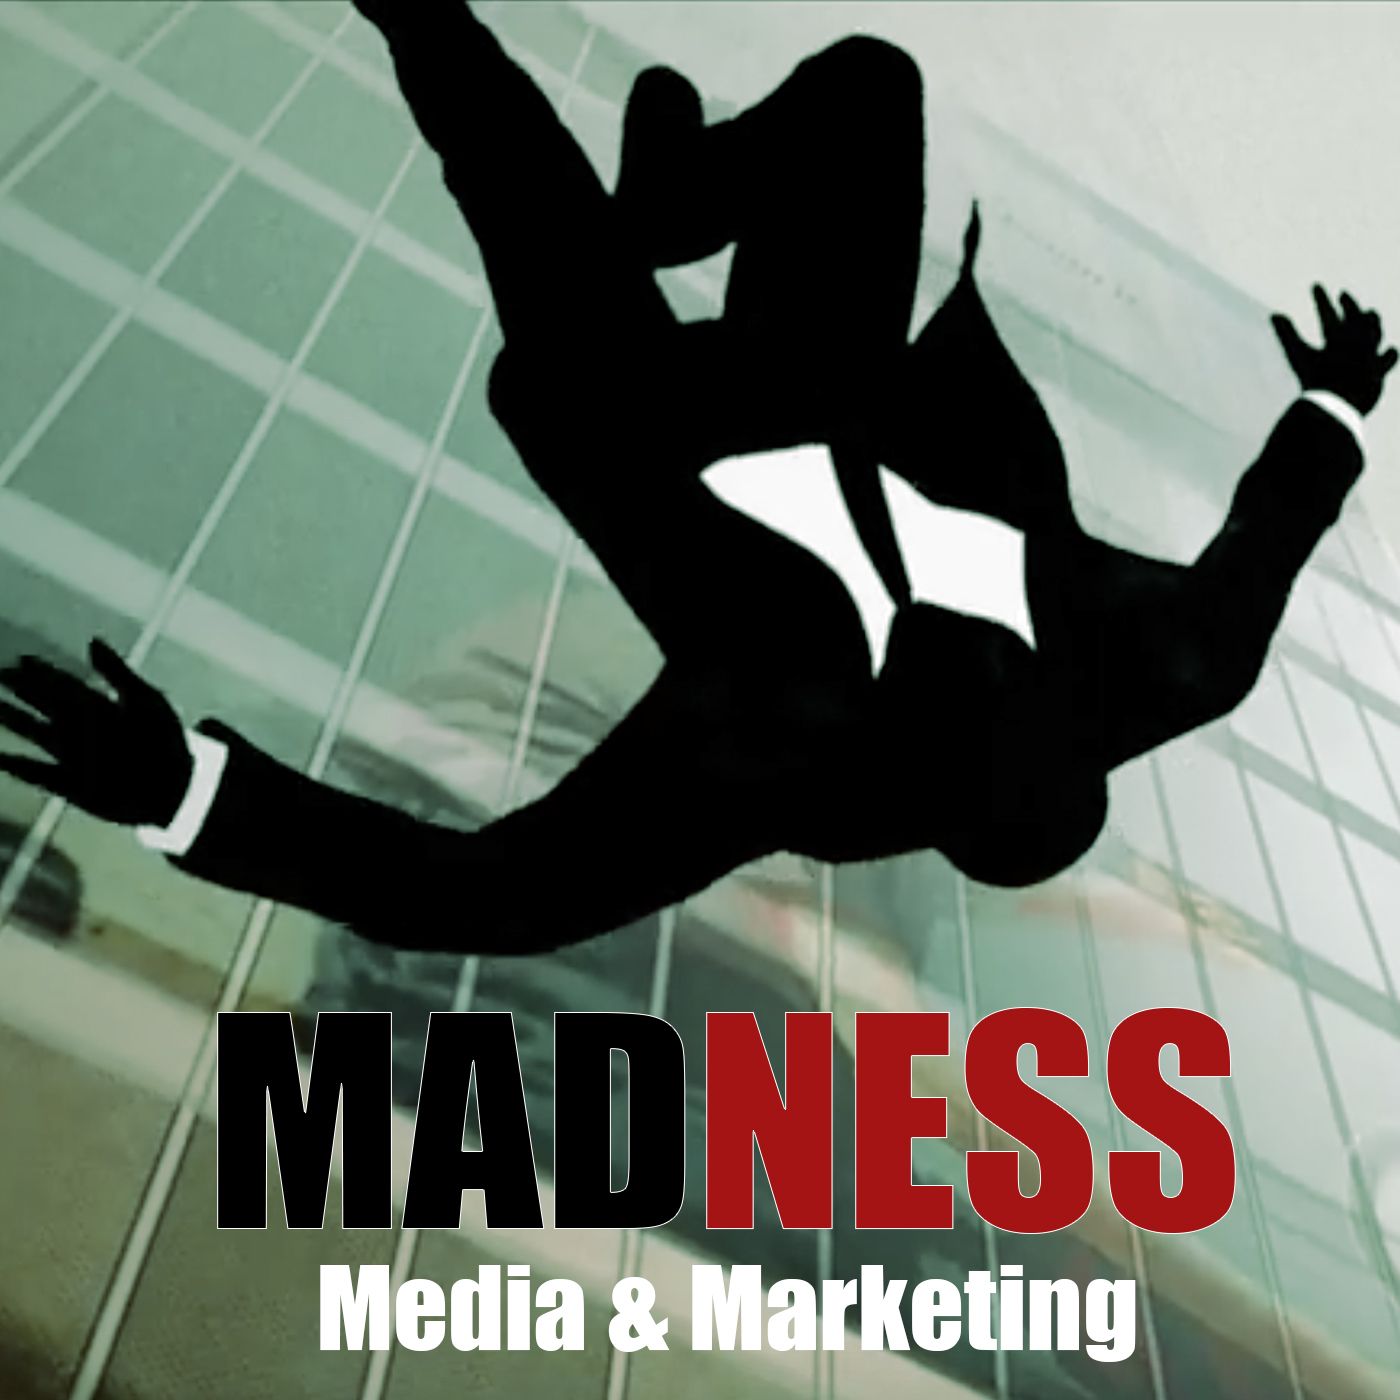 Madness - Media & Marketing ideas